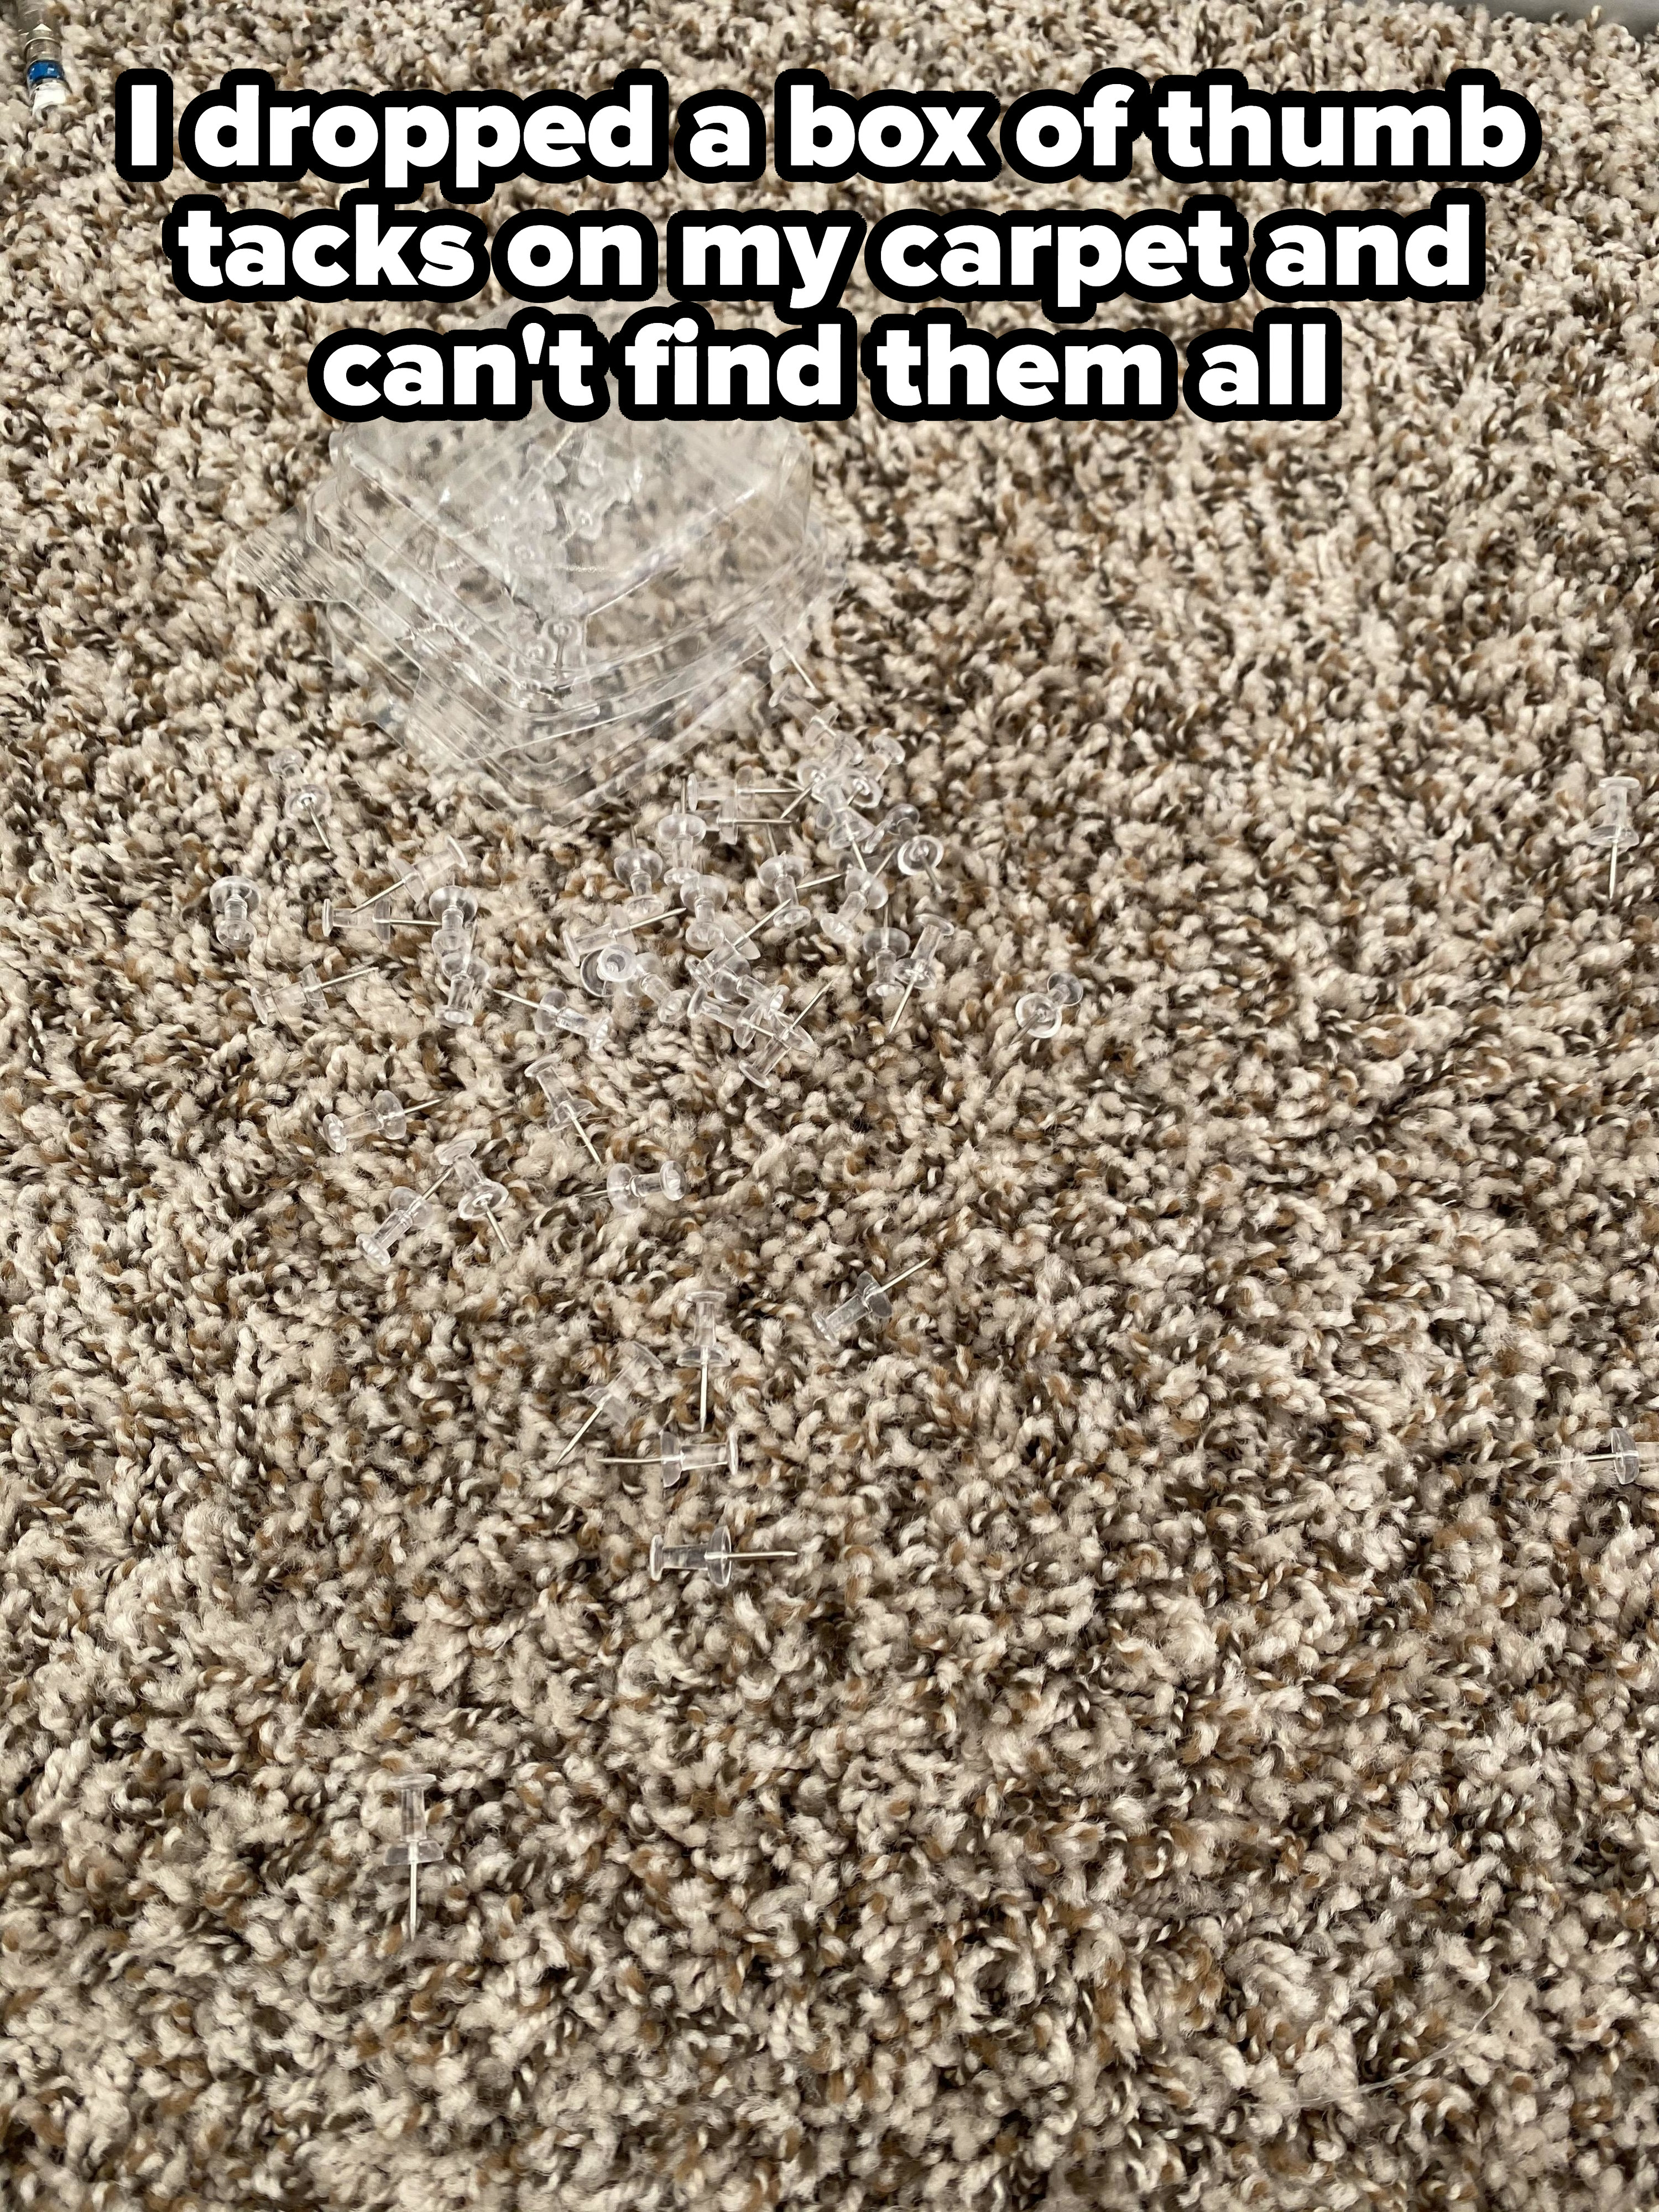 thumb tacks blending into a carpet